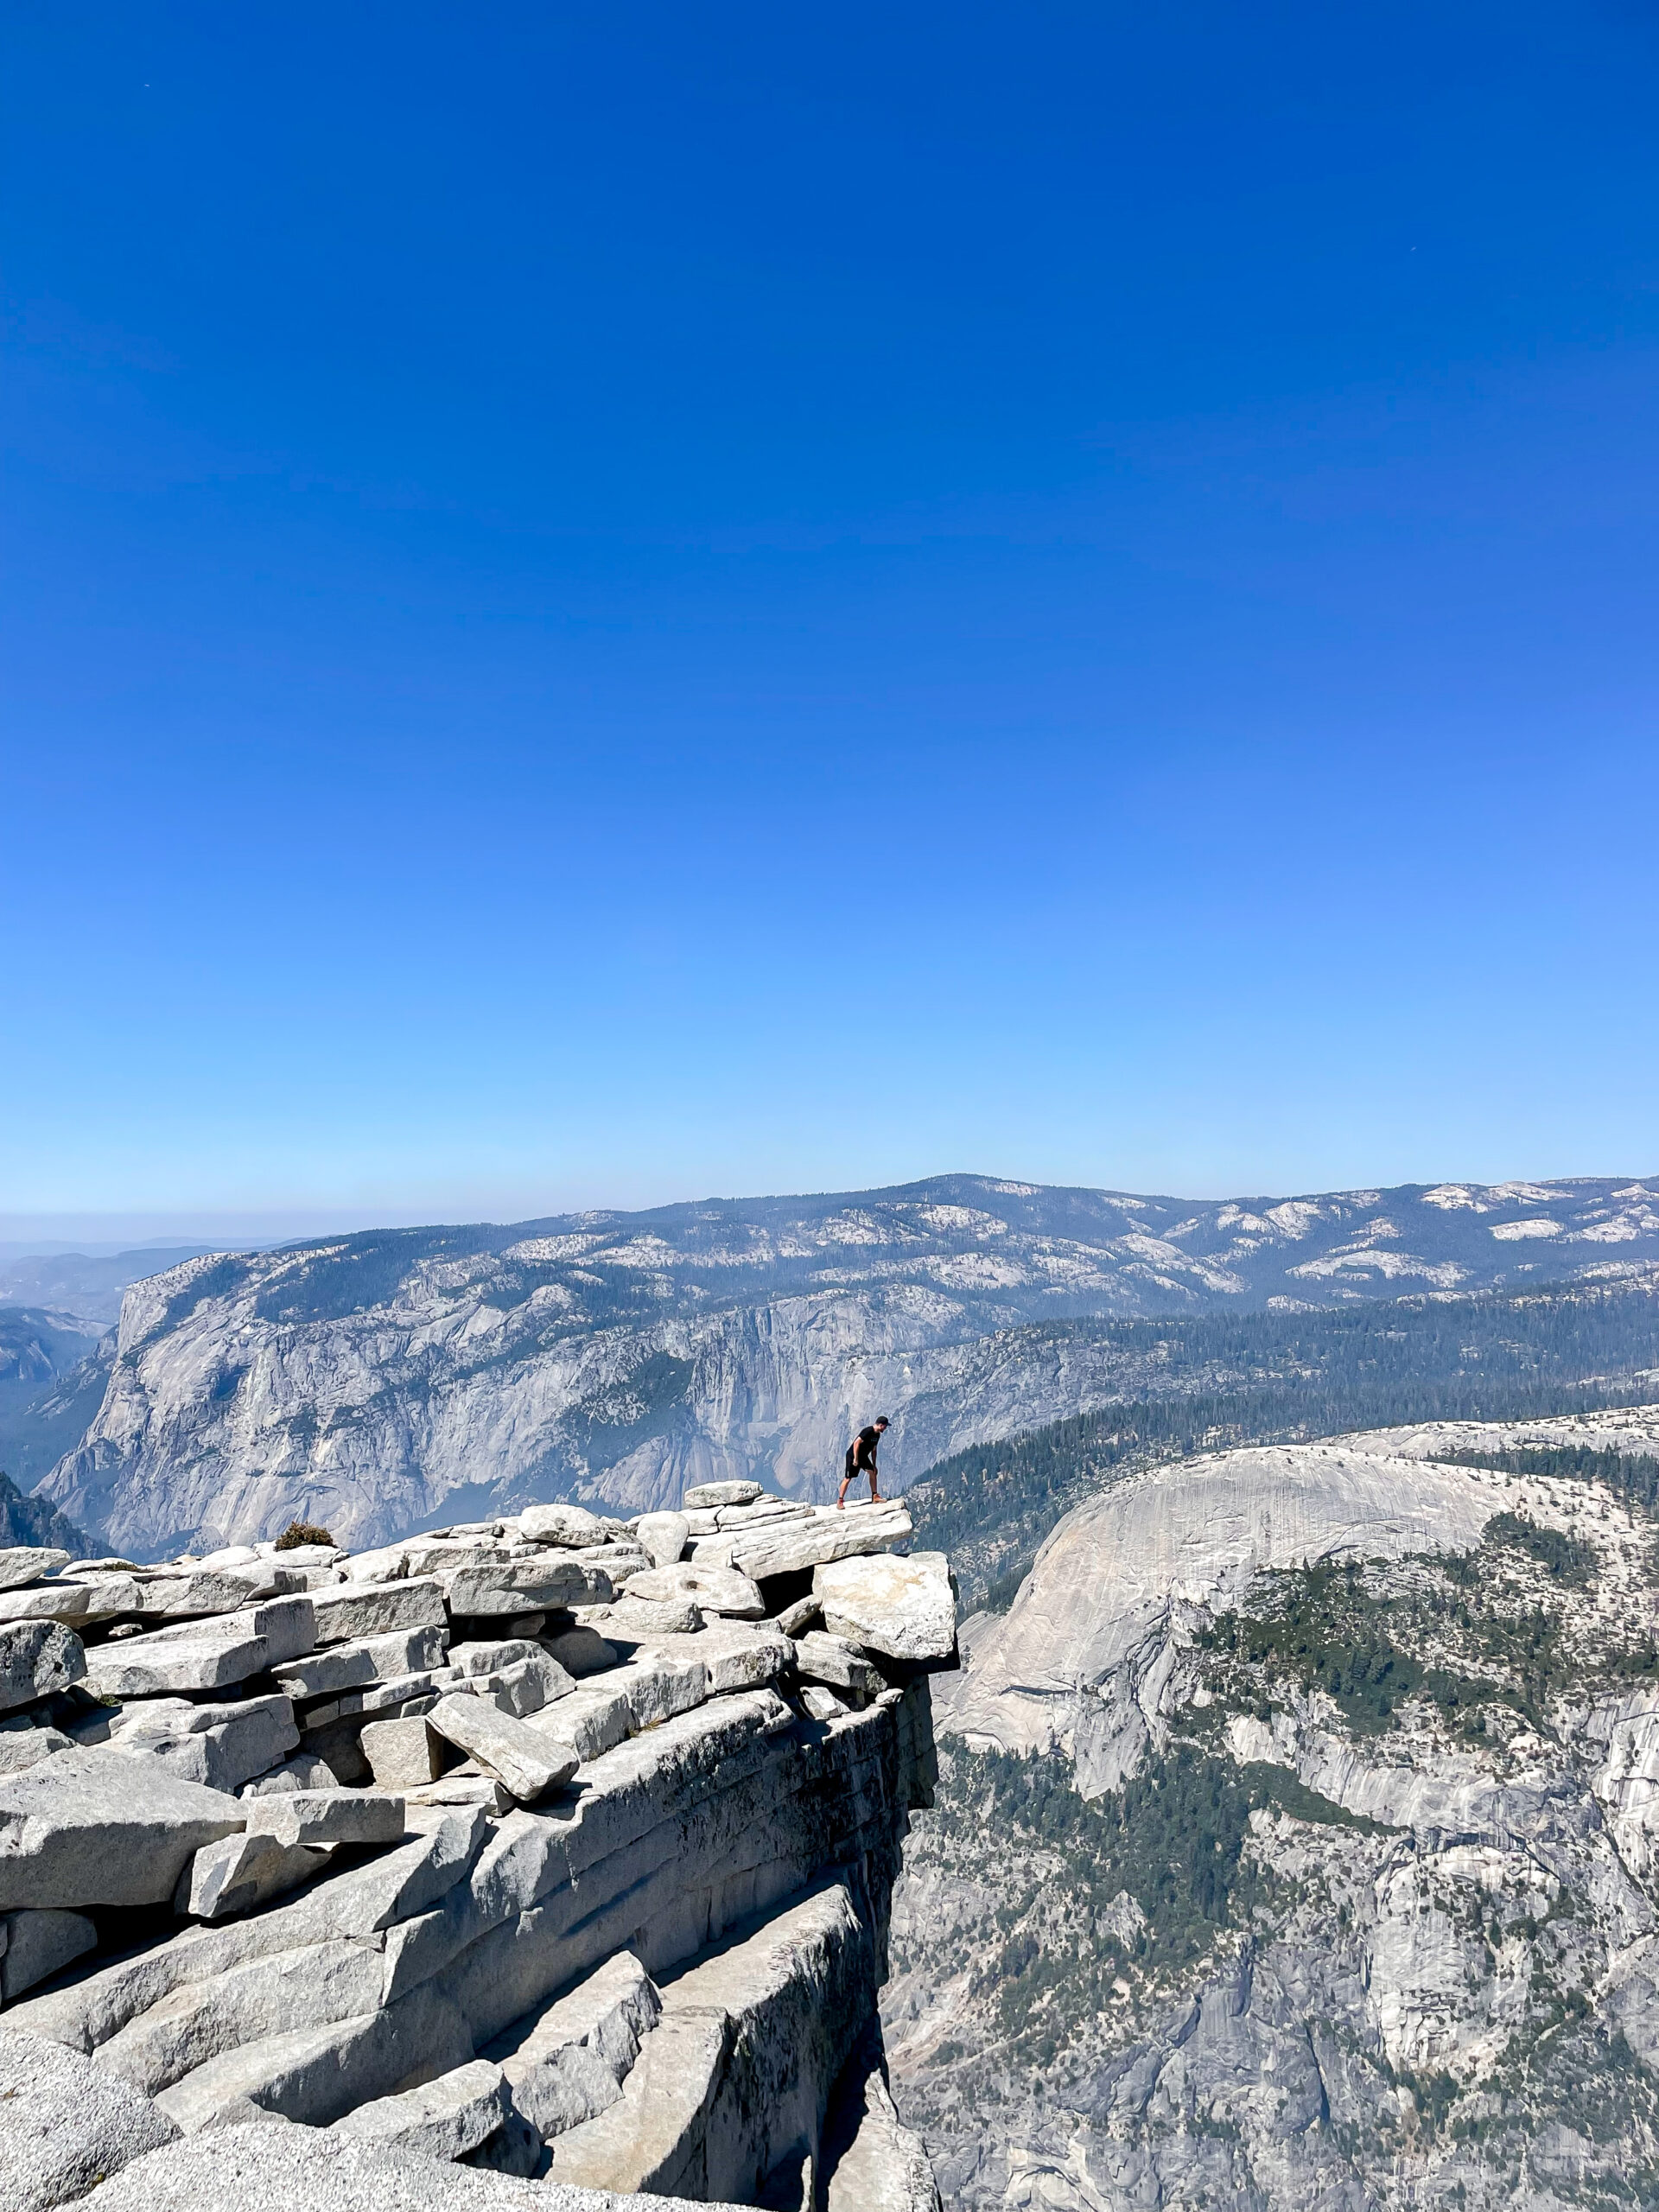 Top of Half Dome in Yosemite